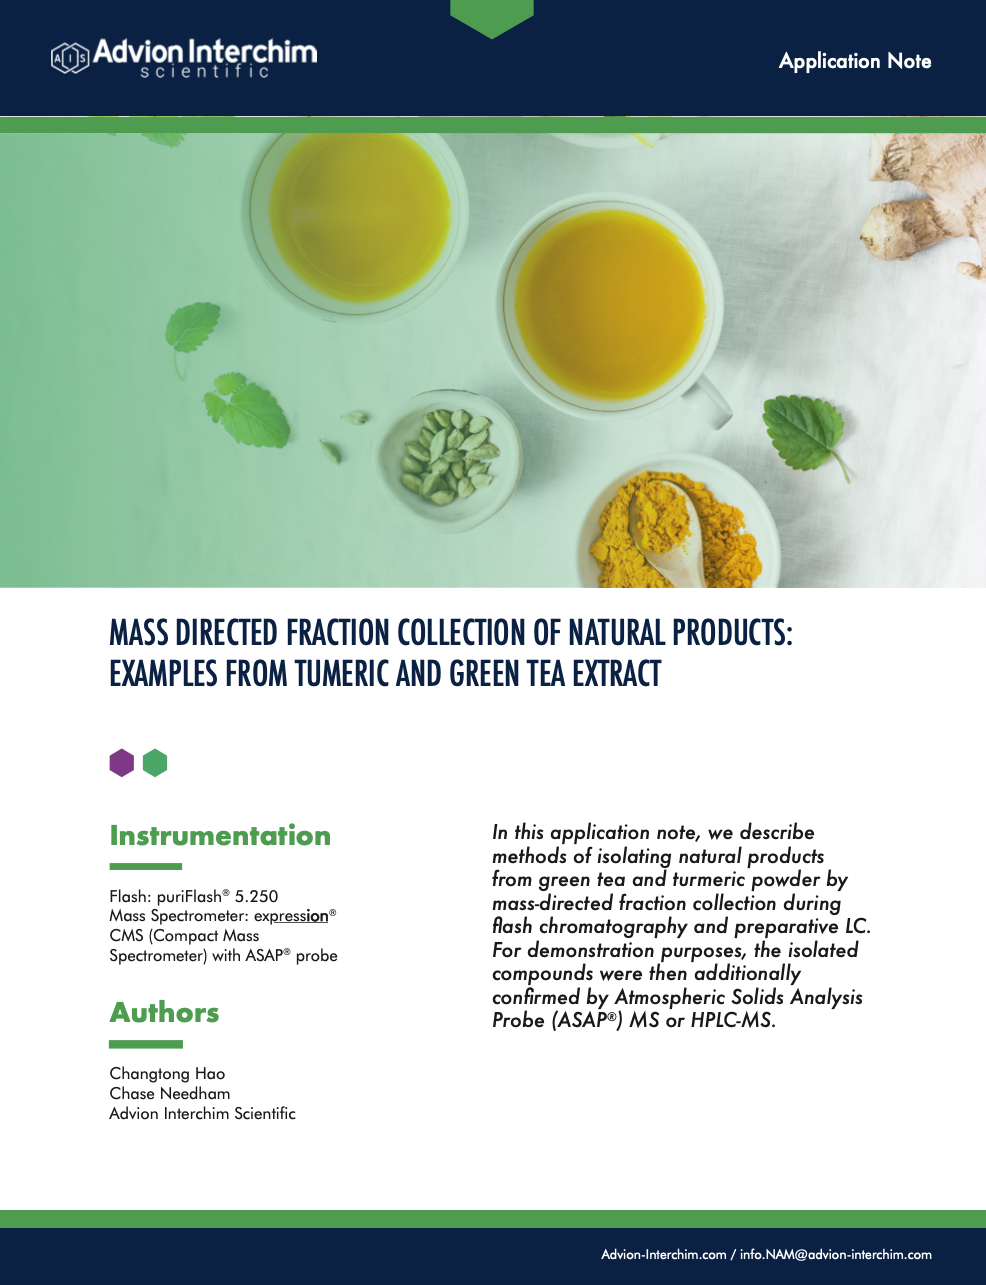 Collecte de fractions dirigées vers la masse de produits naturels : exemples d'extraits de curcuma et de thé vert